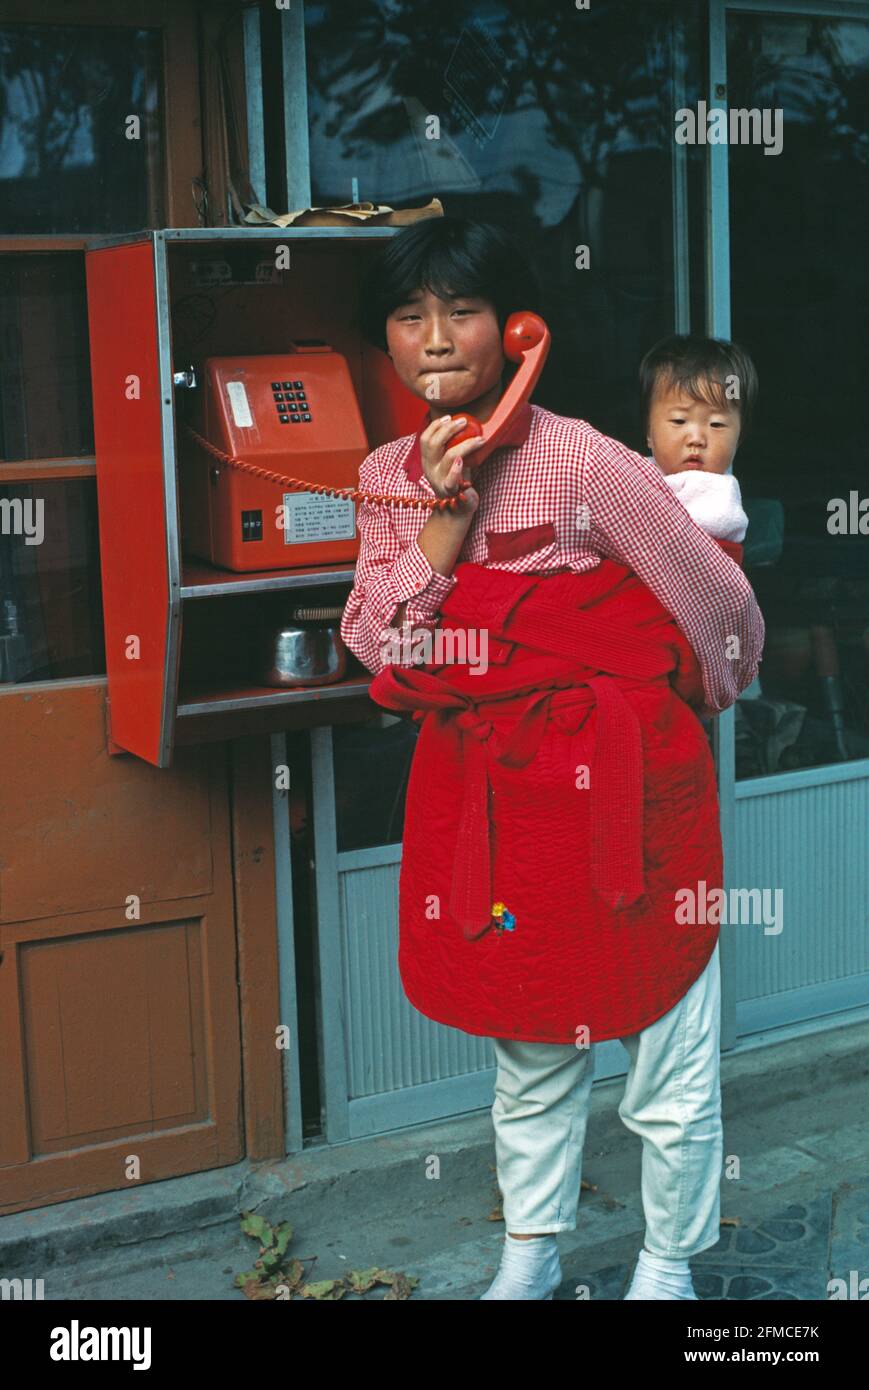 South Korea. Seoul city. Woman using public telephone. Child on her back. Stock Photo